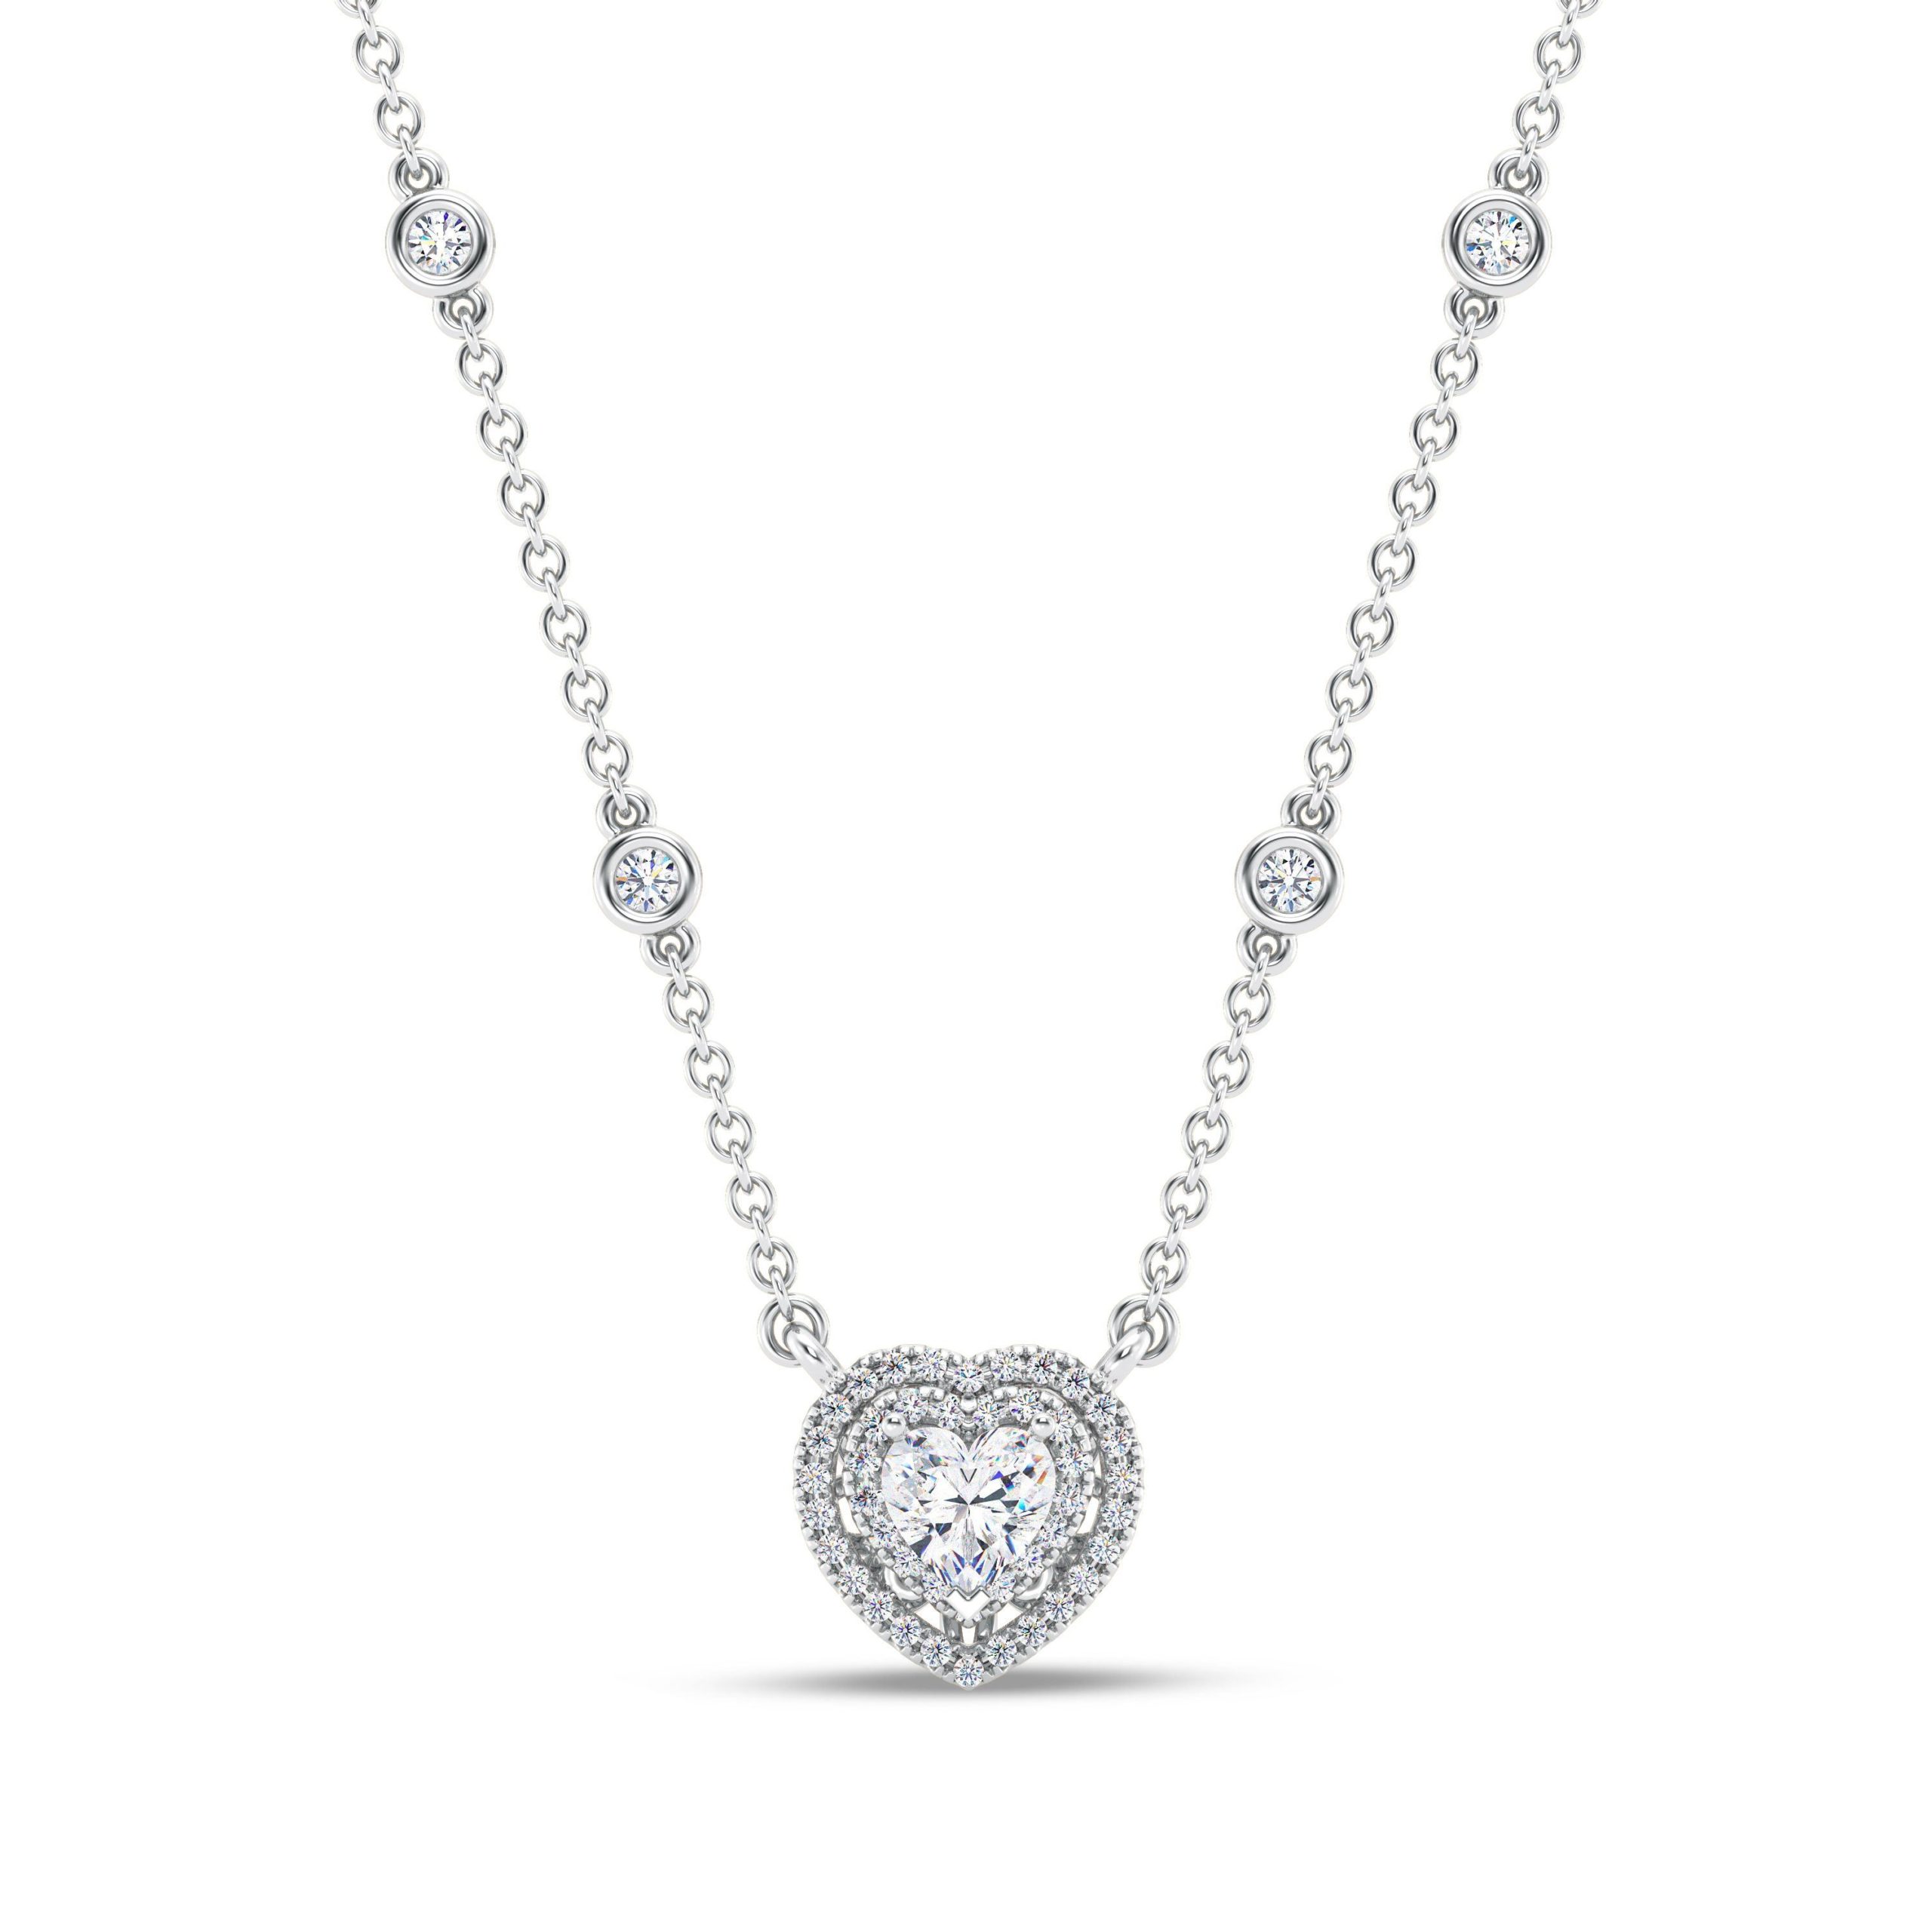 10.55 TDW Round Brilliant Cut Diamond Necklace 18k White Gold Lab-Grown  Diamond at Rs 580032/piece | हीरे का हार का सेट in Surat | ID: 26563968573